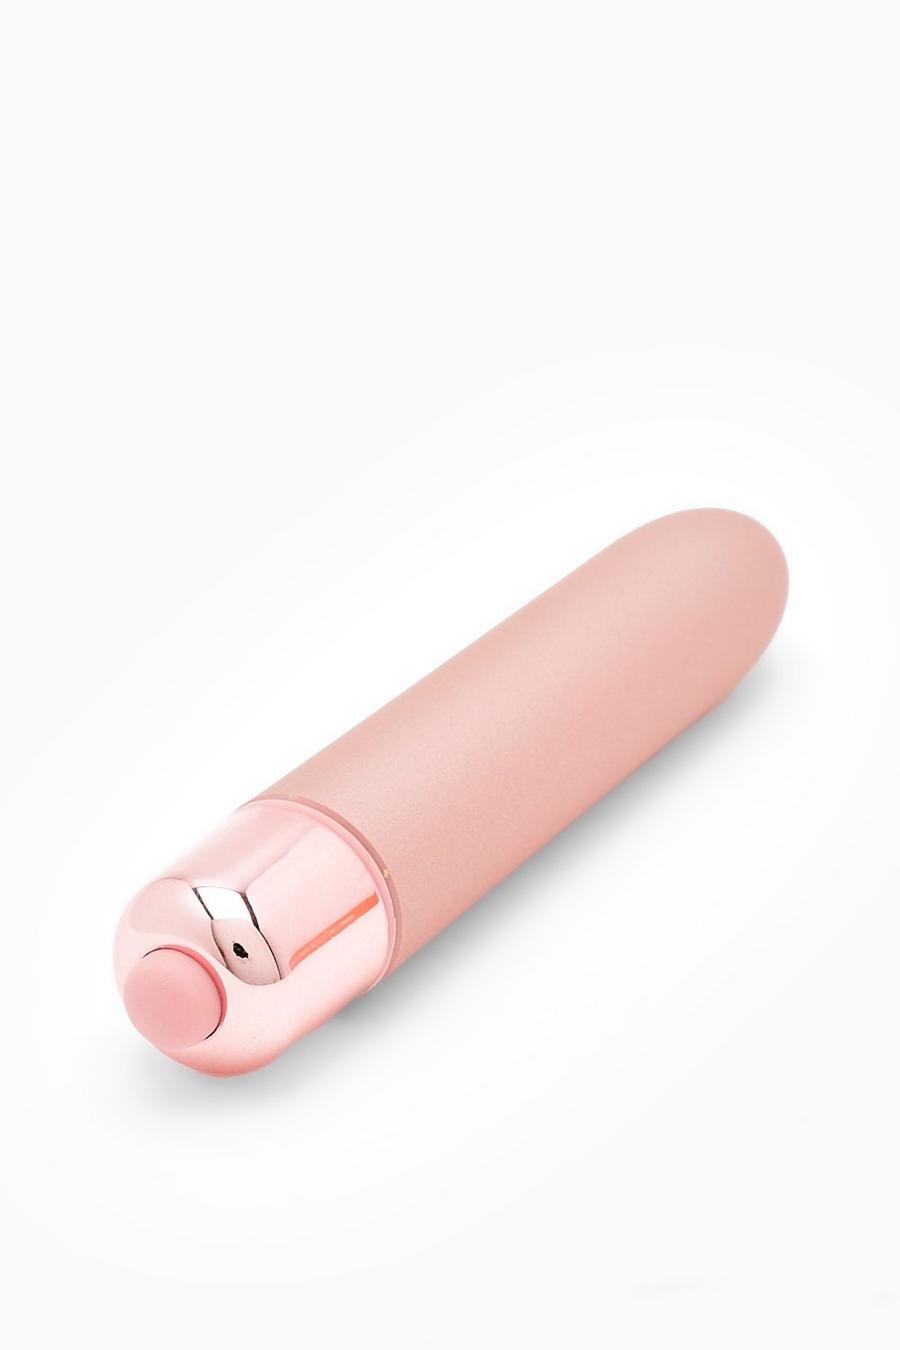 Blush pink Velvet Touch Mini Vibrator 